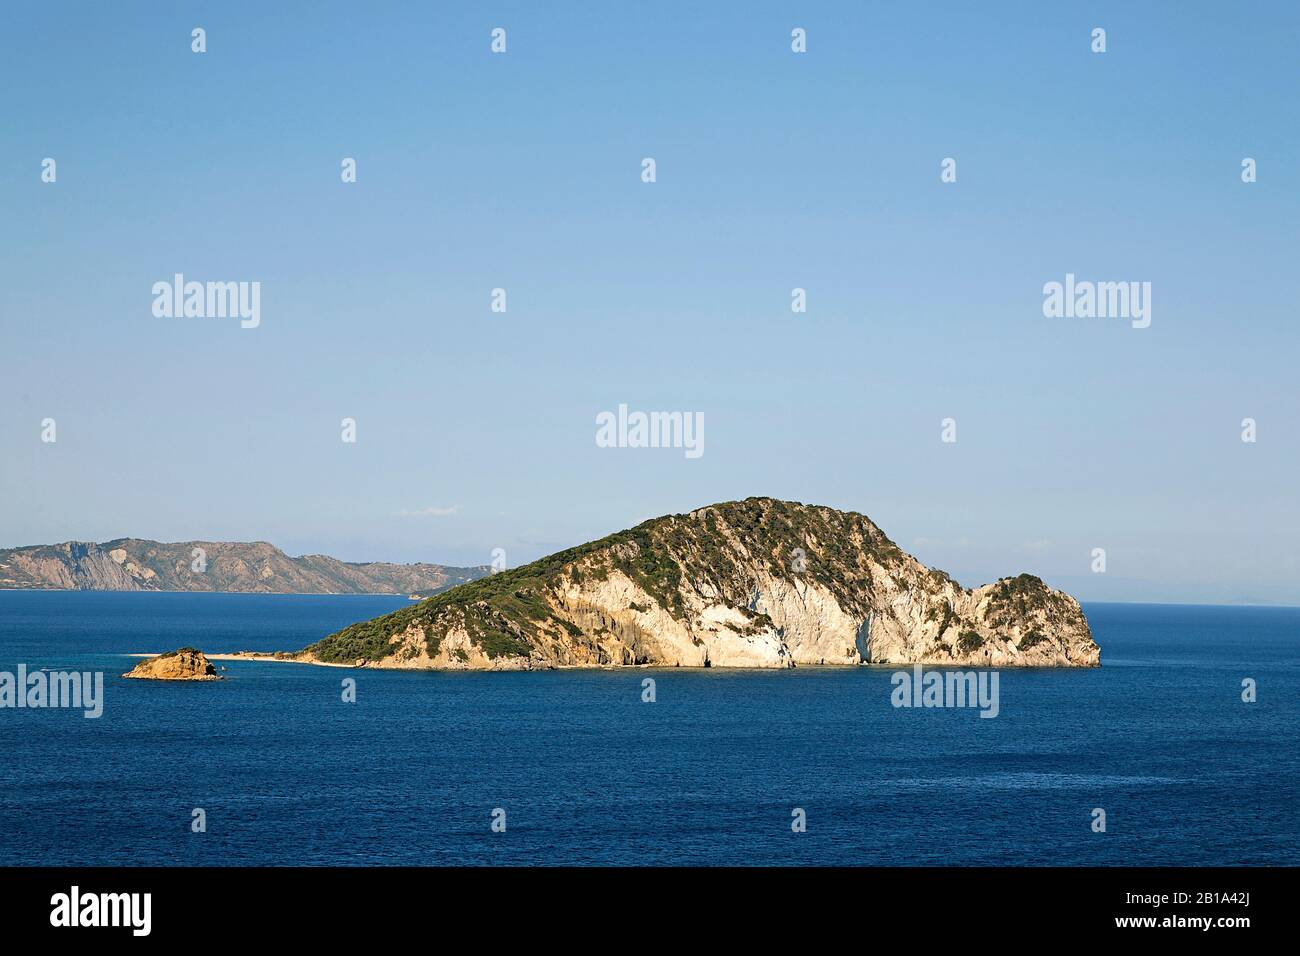 The tiny island Marathonissi, Limni Keriou, Zakynthos island, Greece Stock Photo